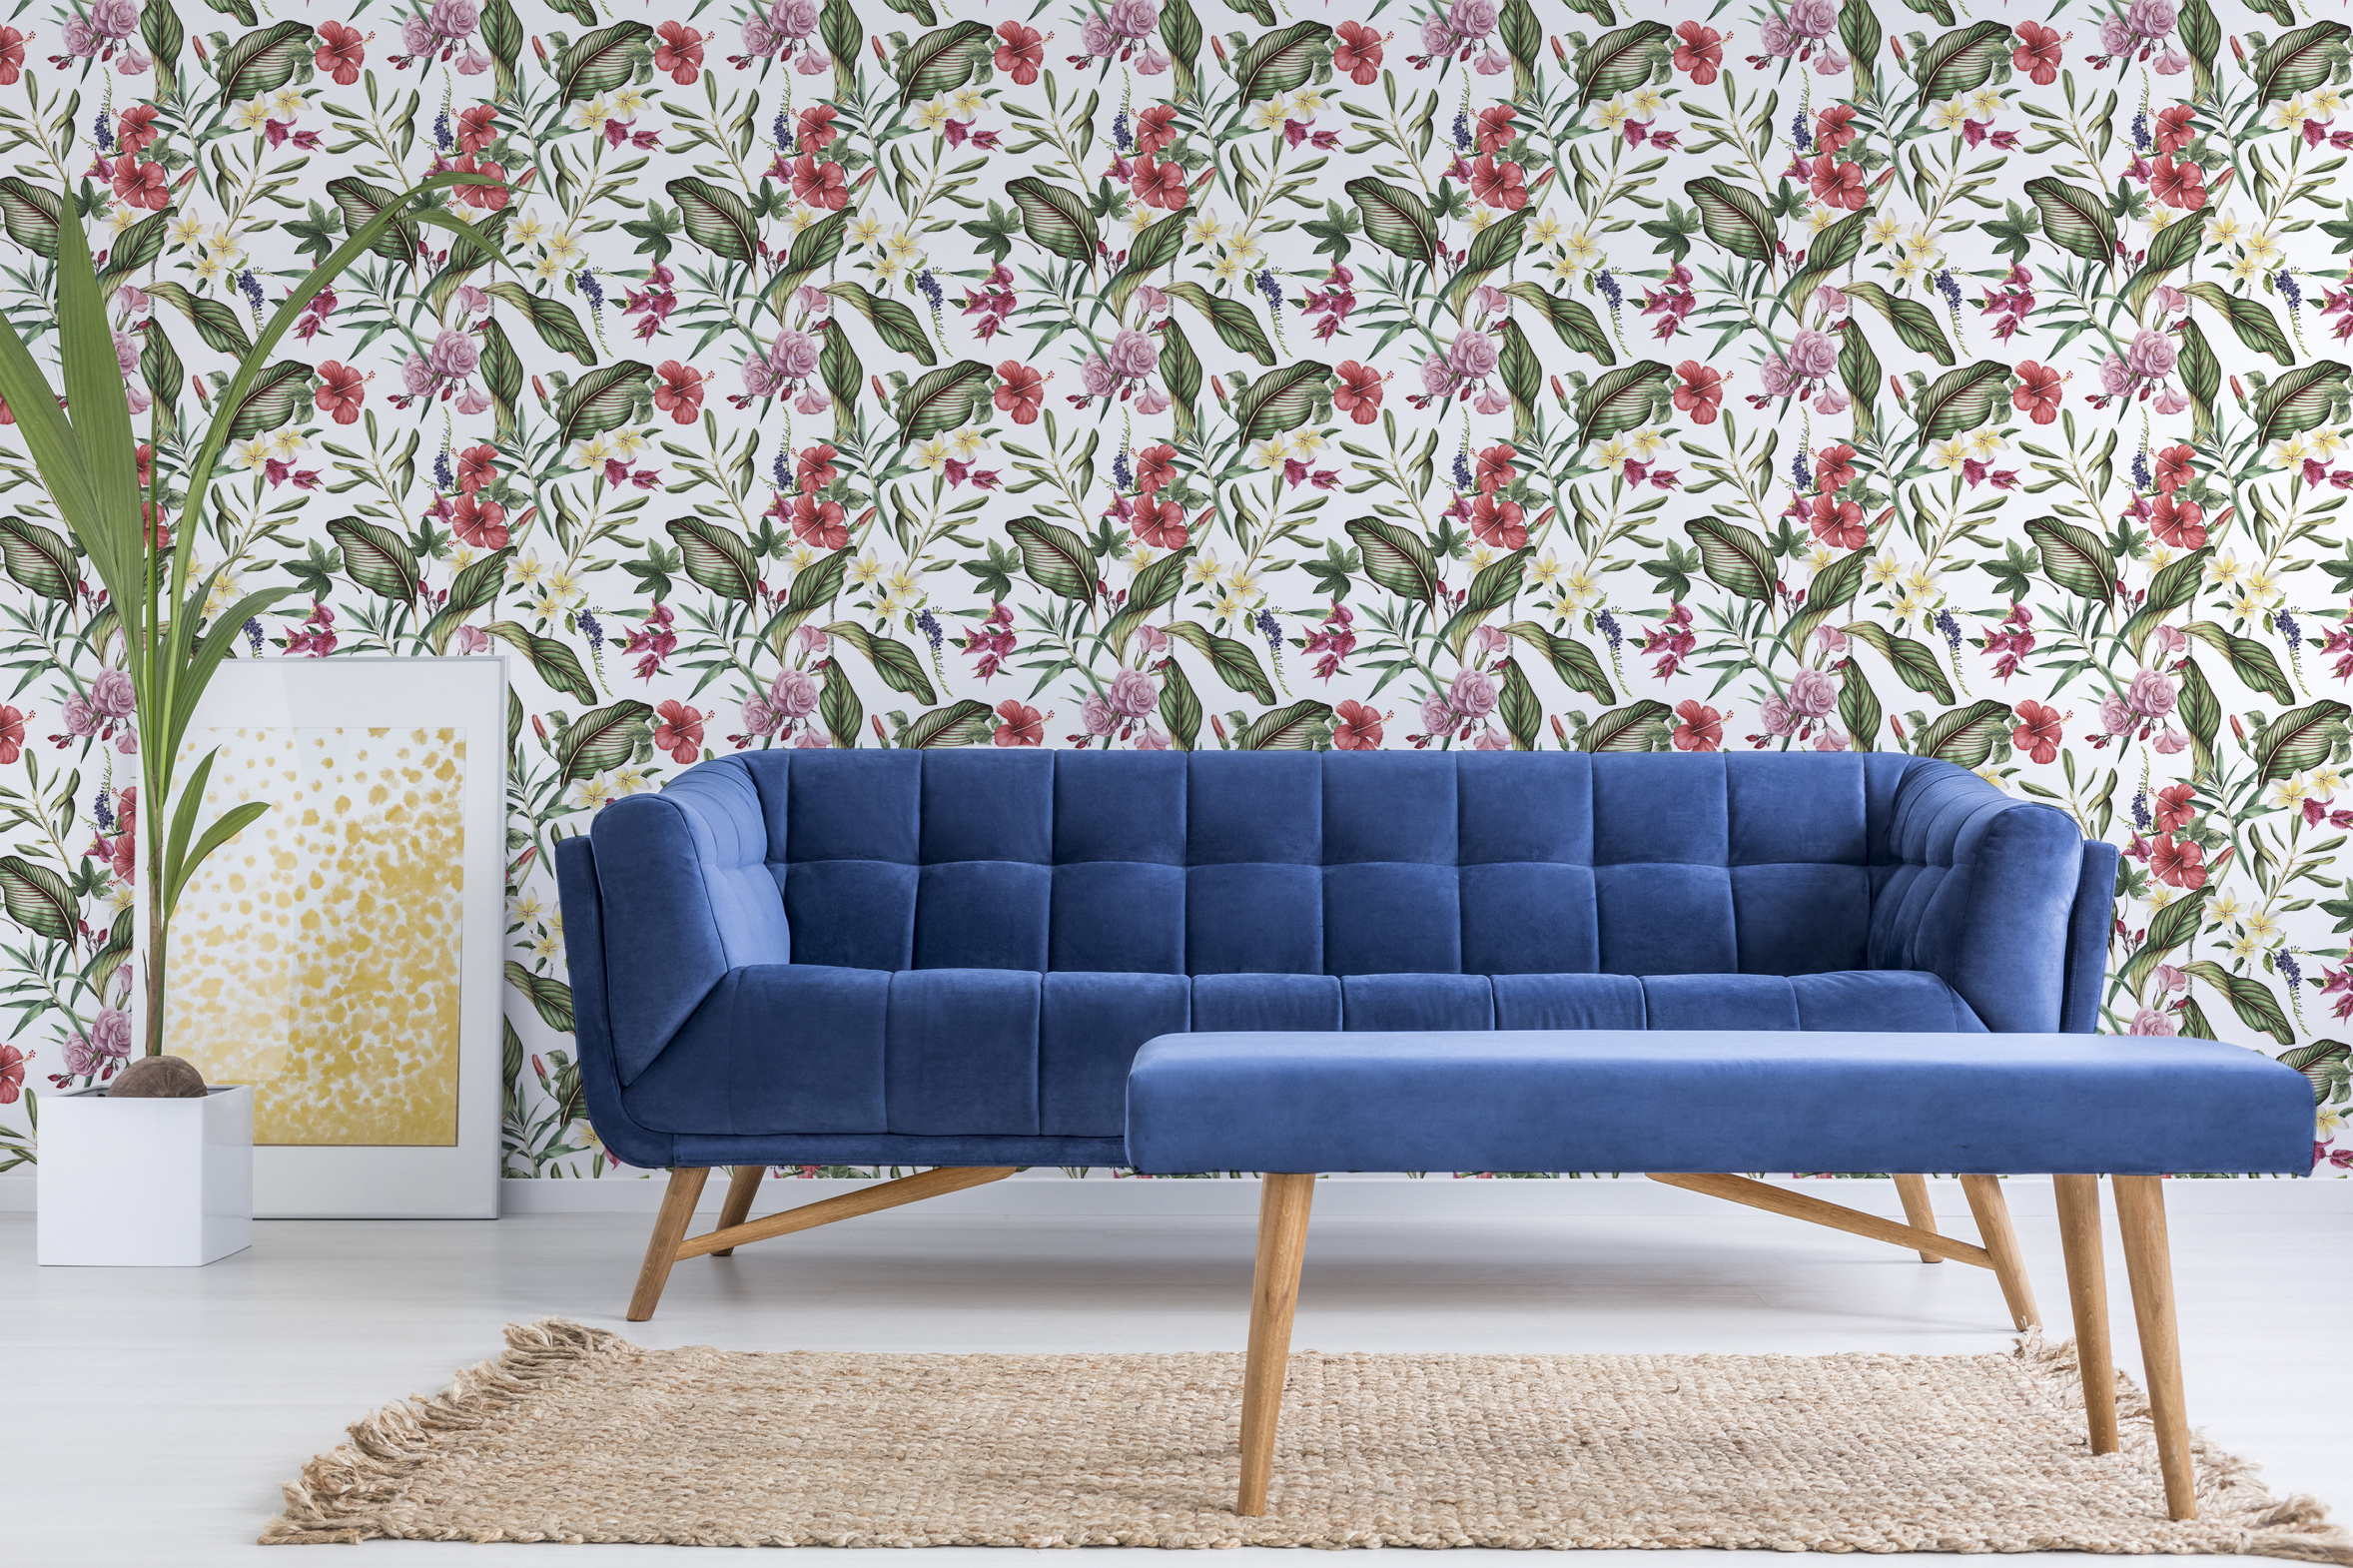 Floral motif pattern • Boho - Living room - Nature - Wall Murals